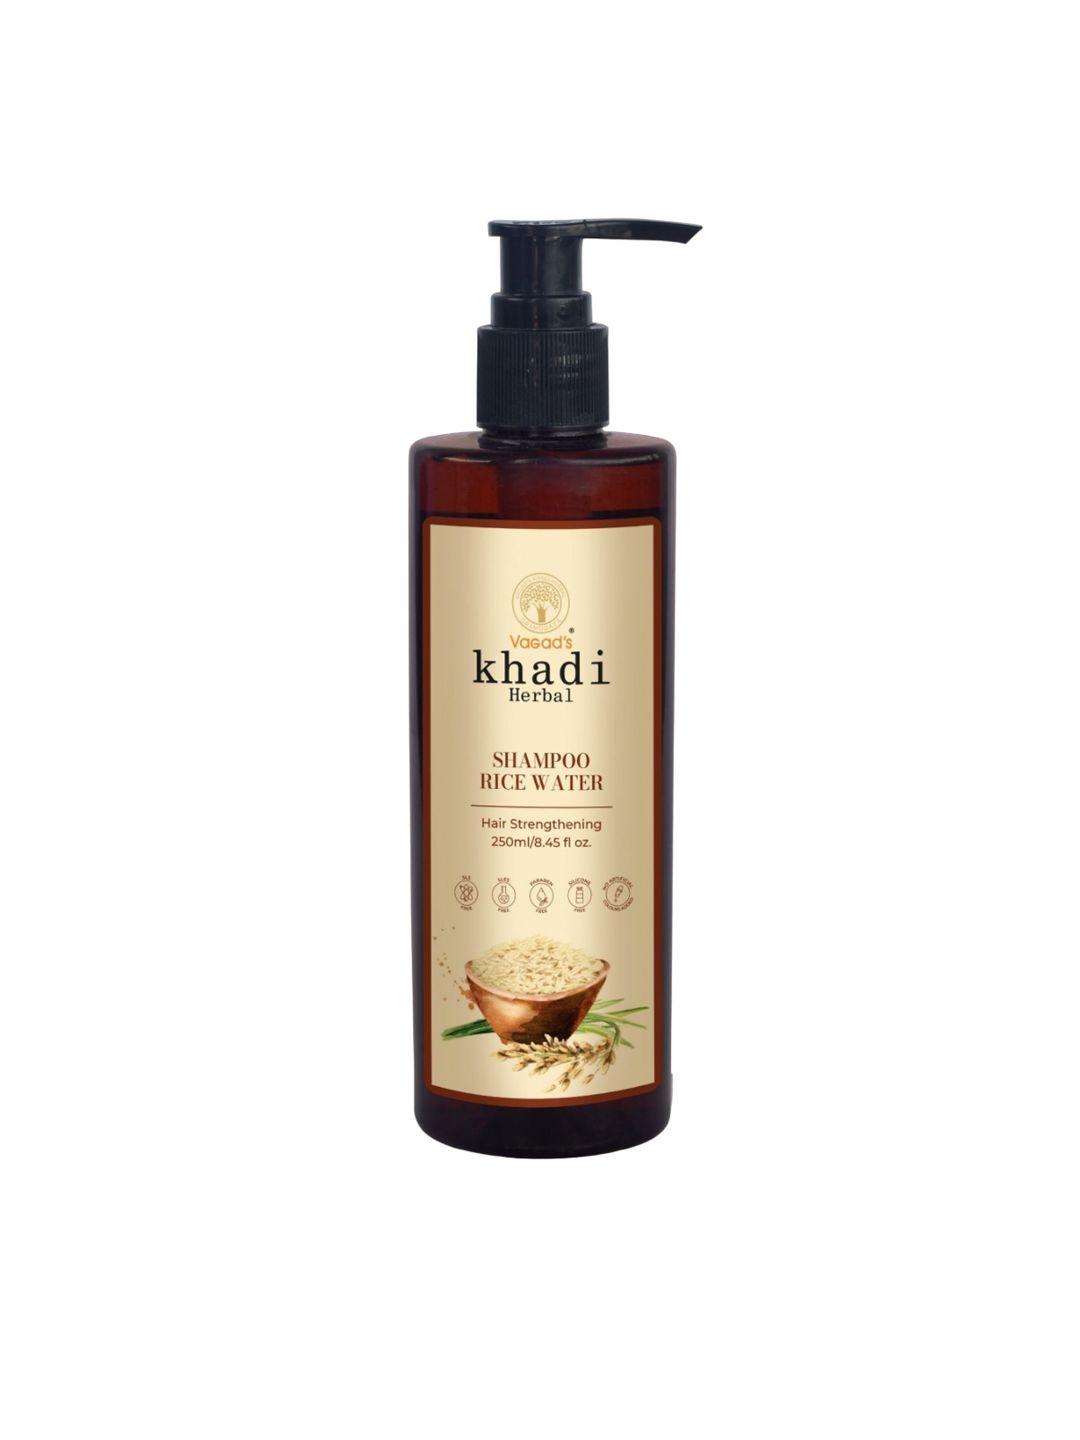 vagads-herbal-rice-water-shampoo-for-hair-strengthening---250ml